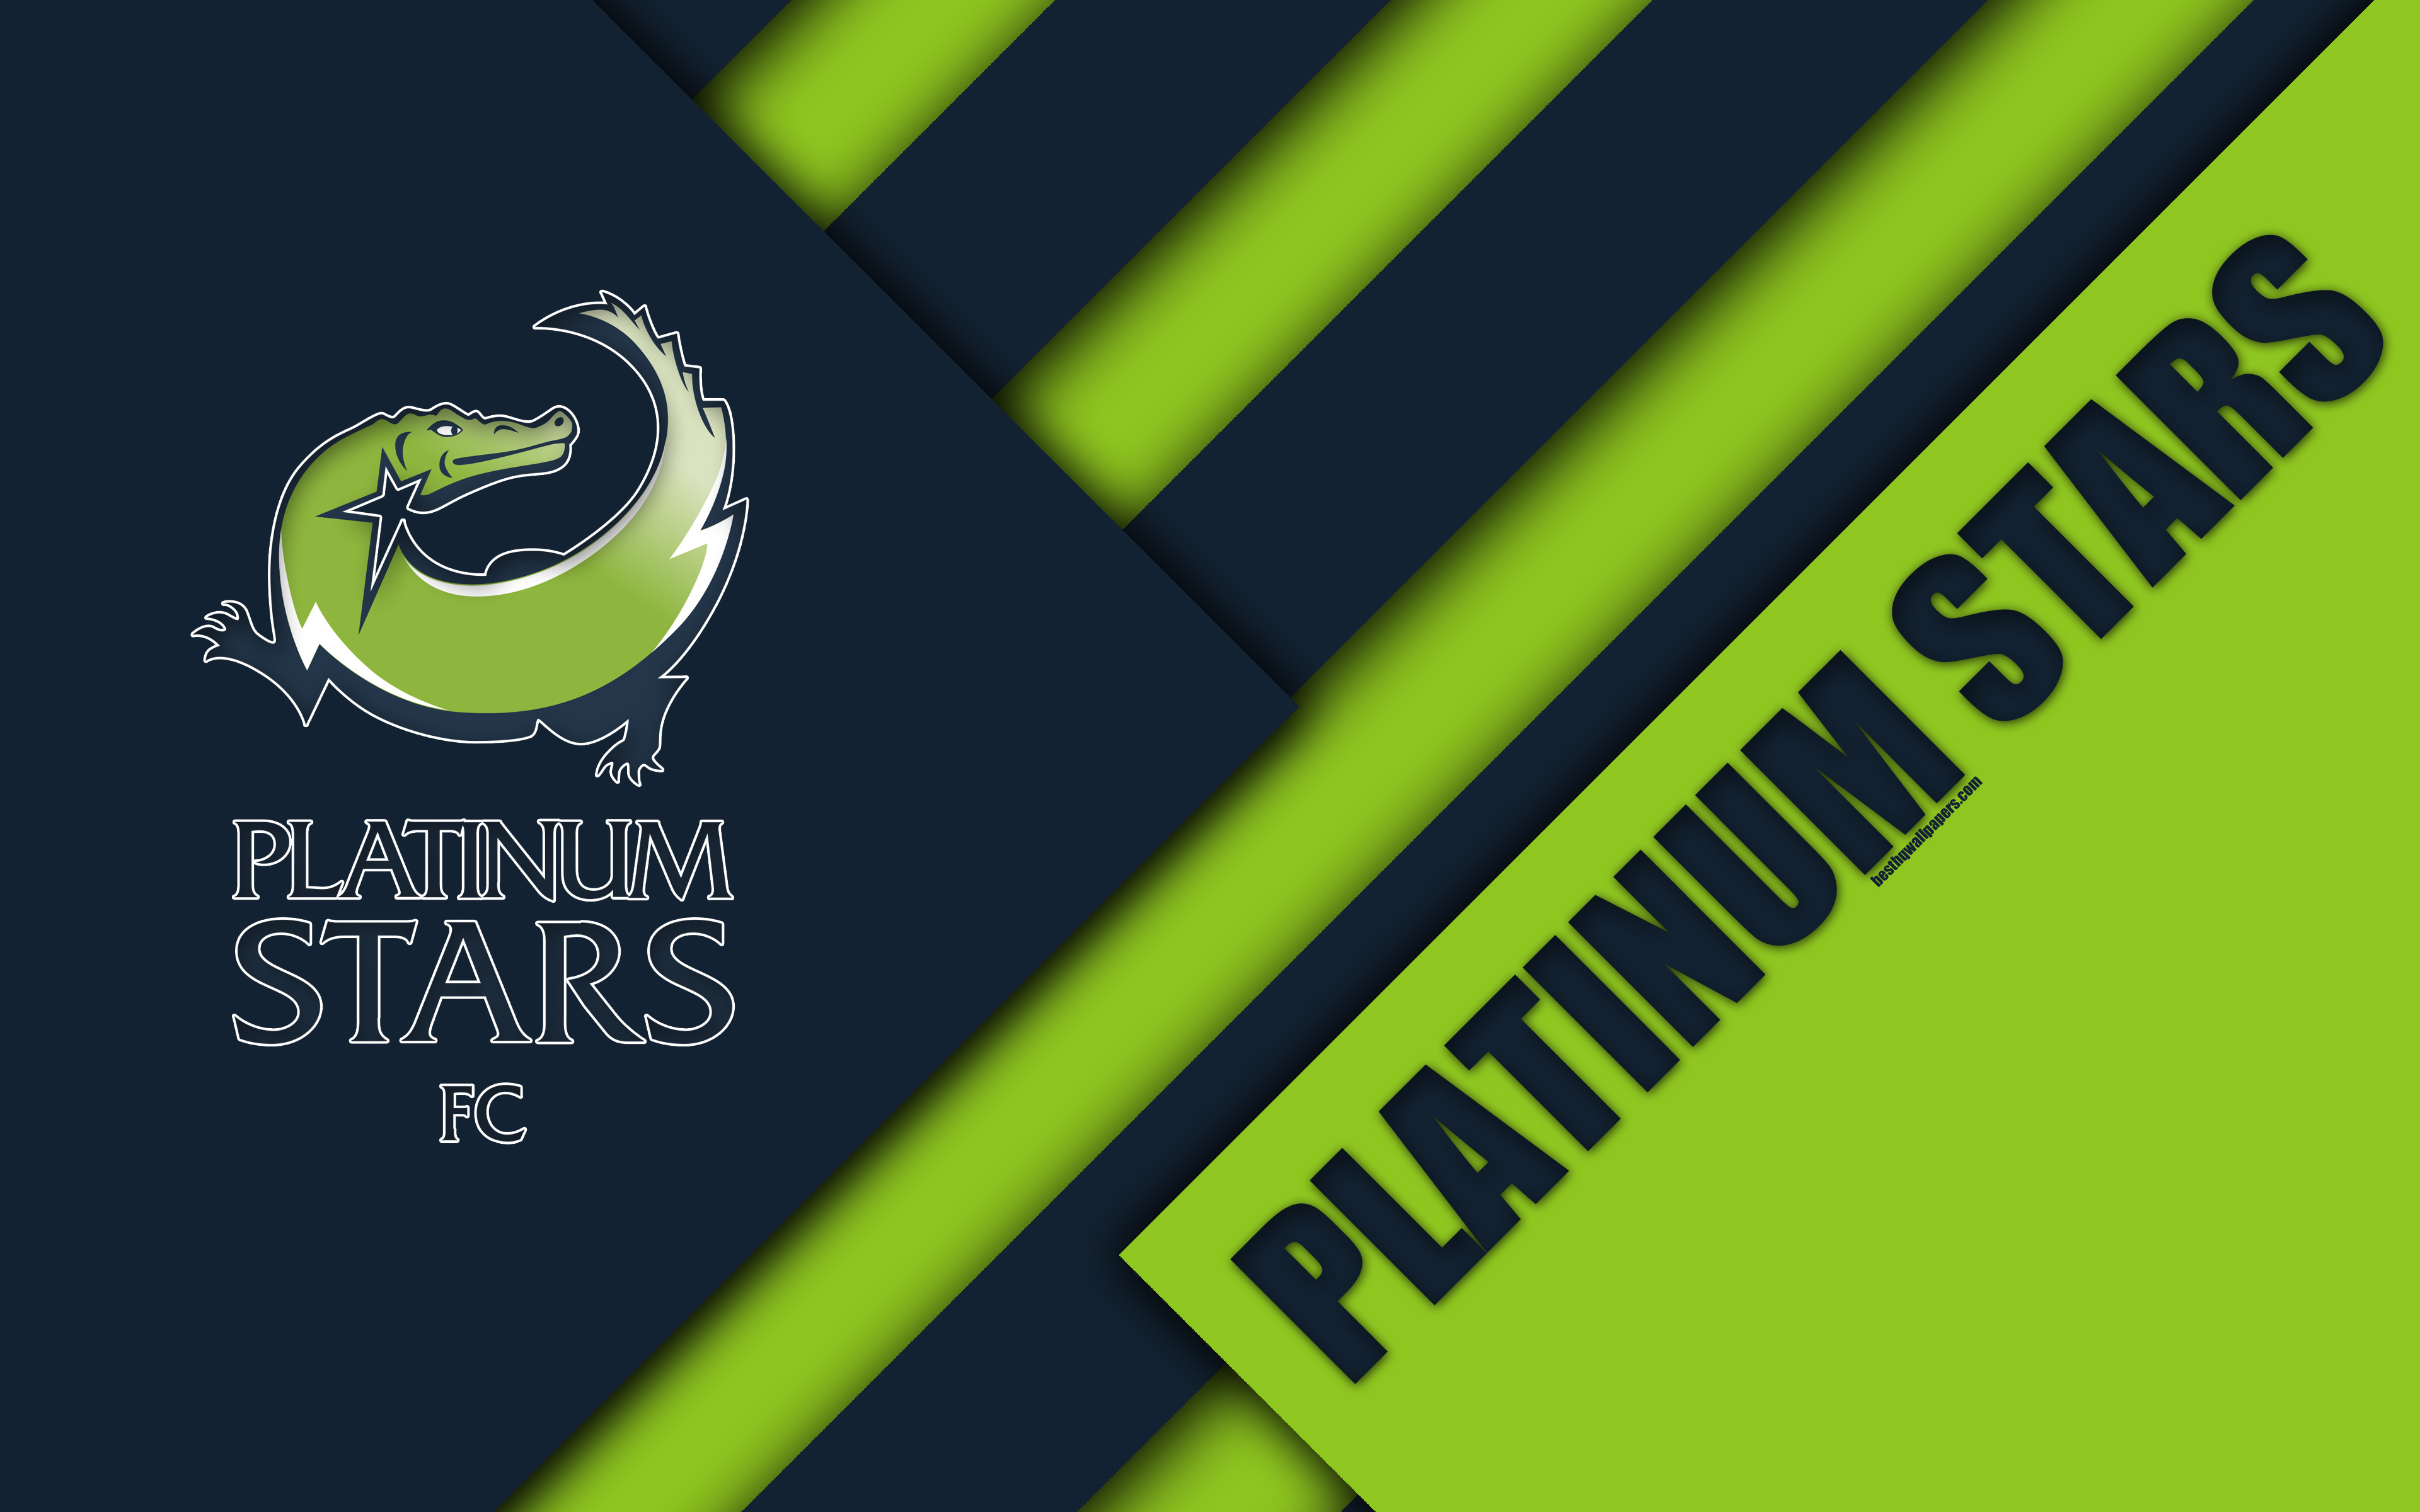 Download wallpaper Platinum Stars FC, 4k, South African Football